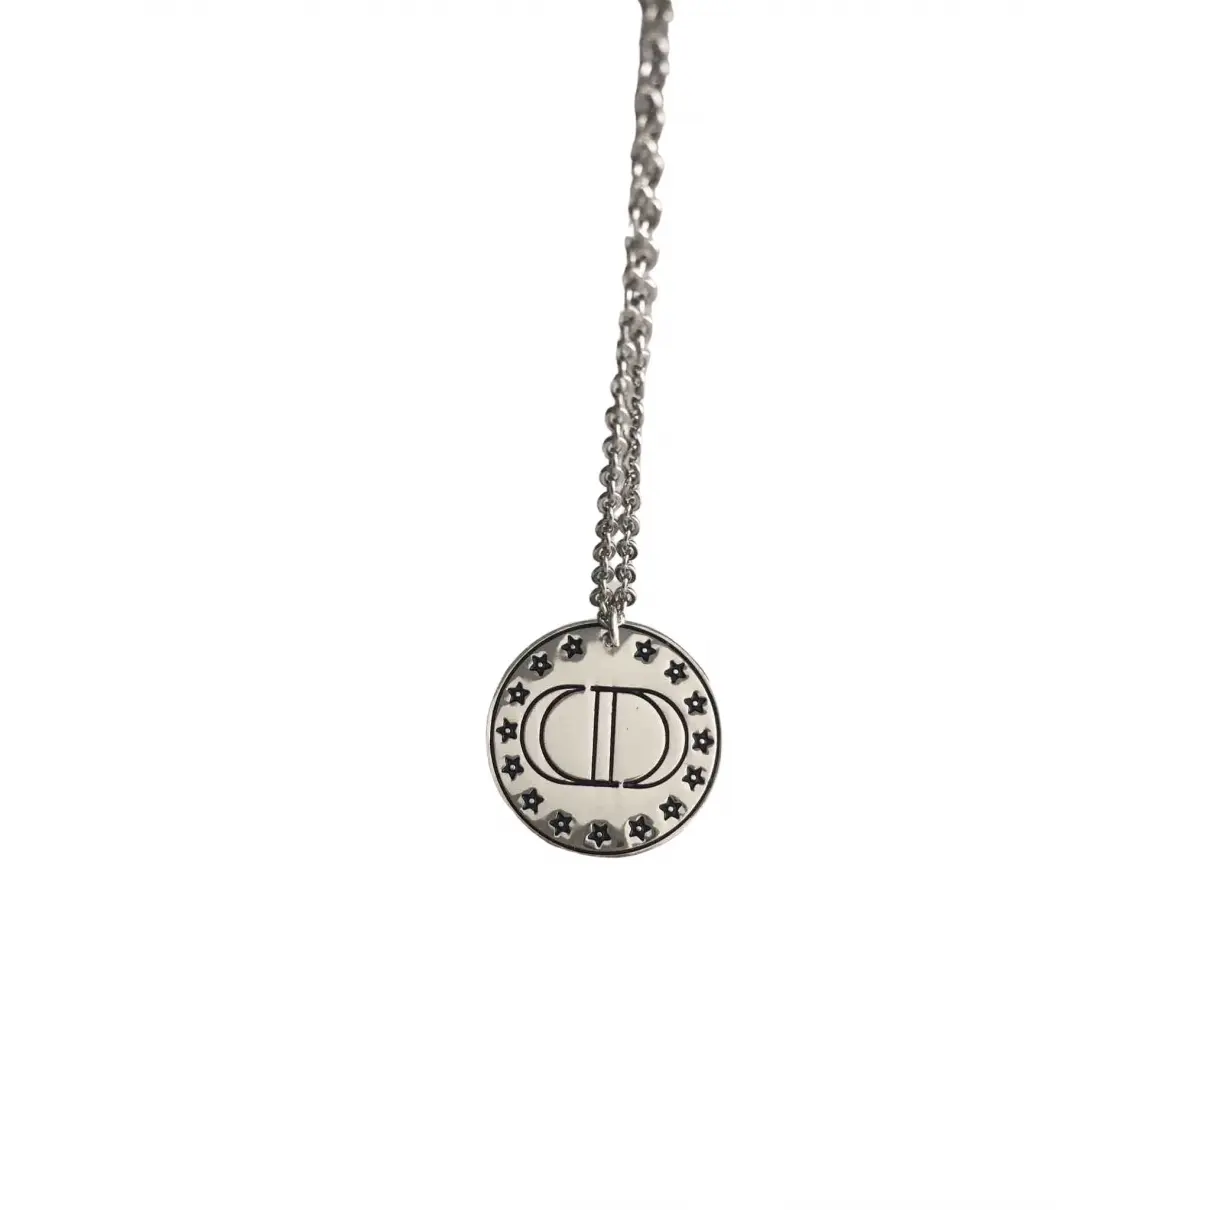 Monogramme long necklace Dior